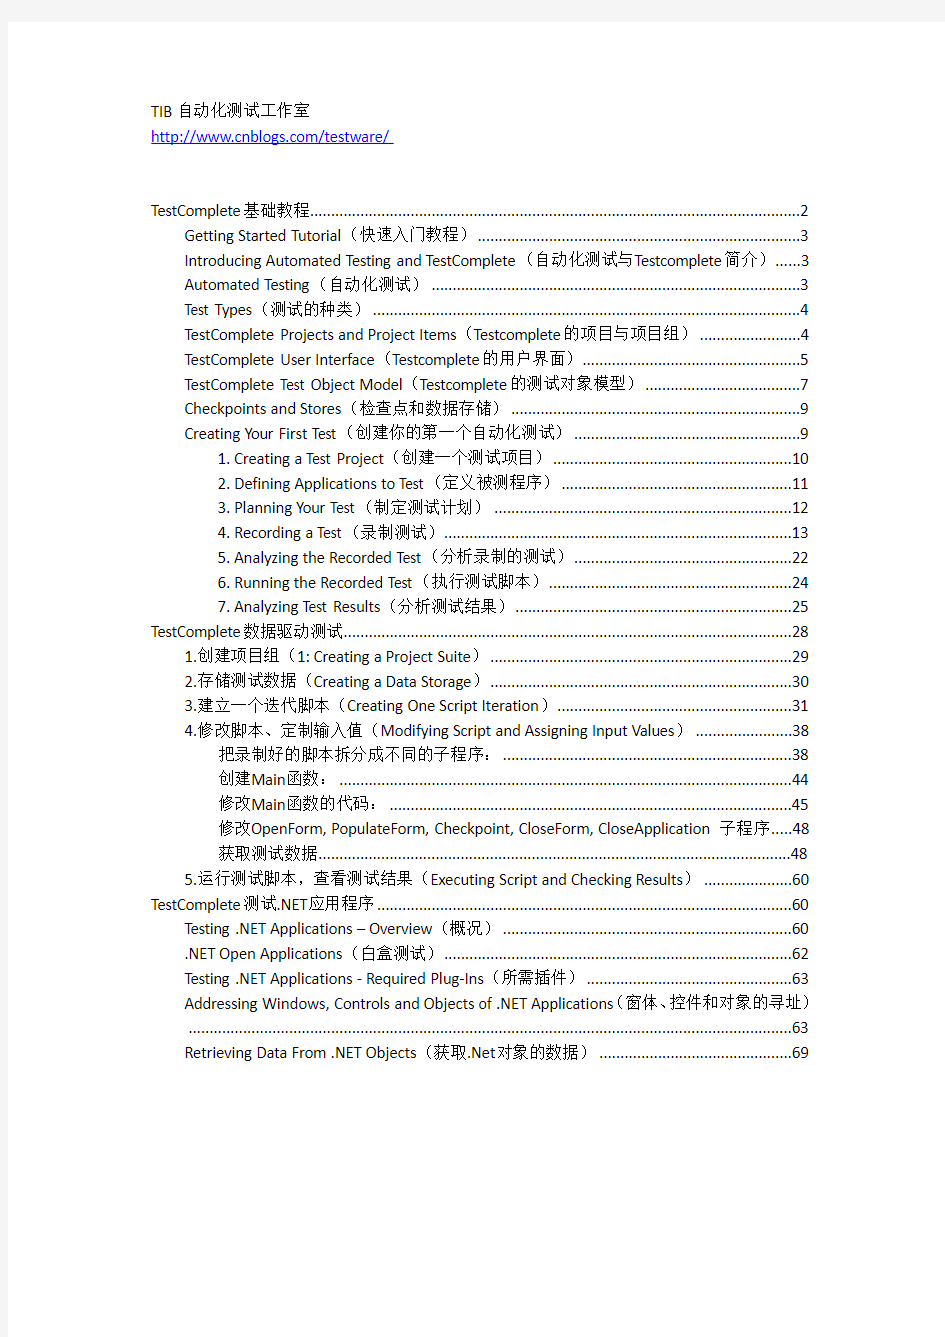 TestComplete中文帮助手册